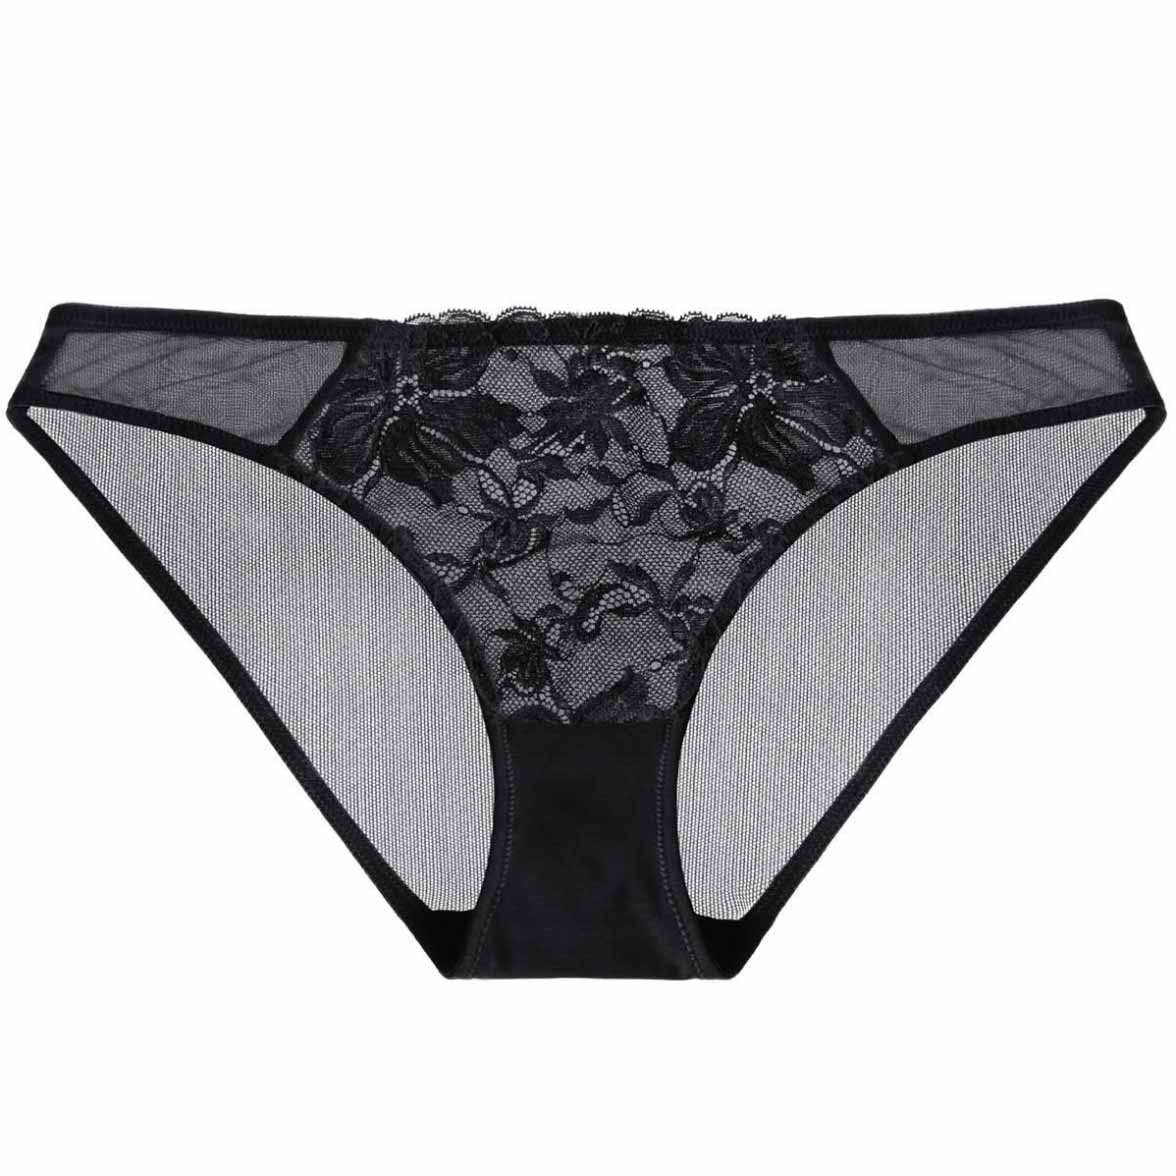 Black lace underwear